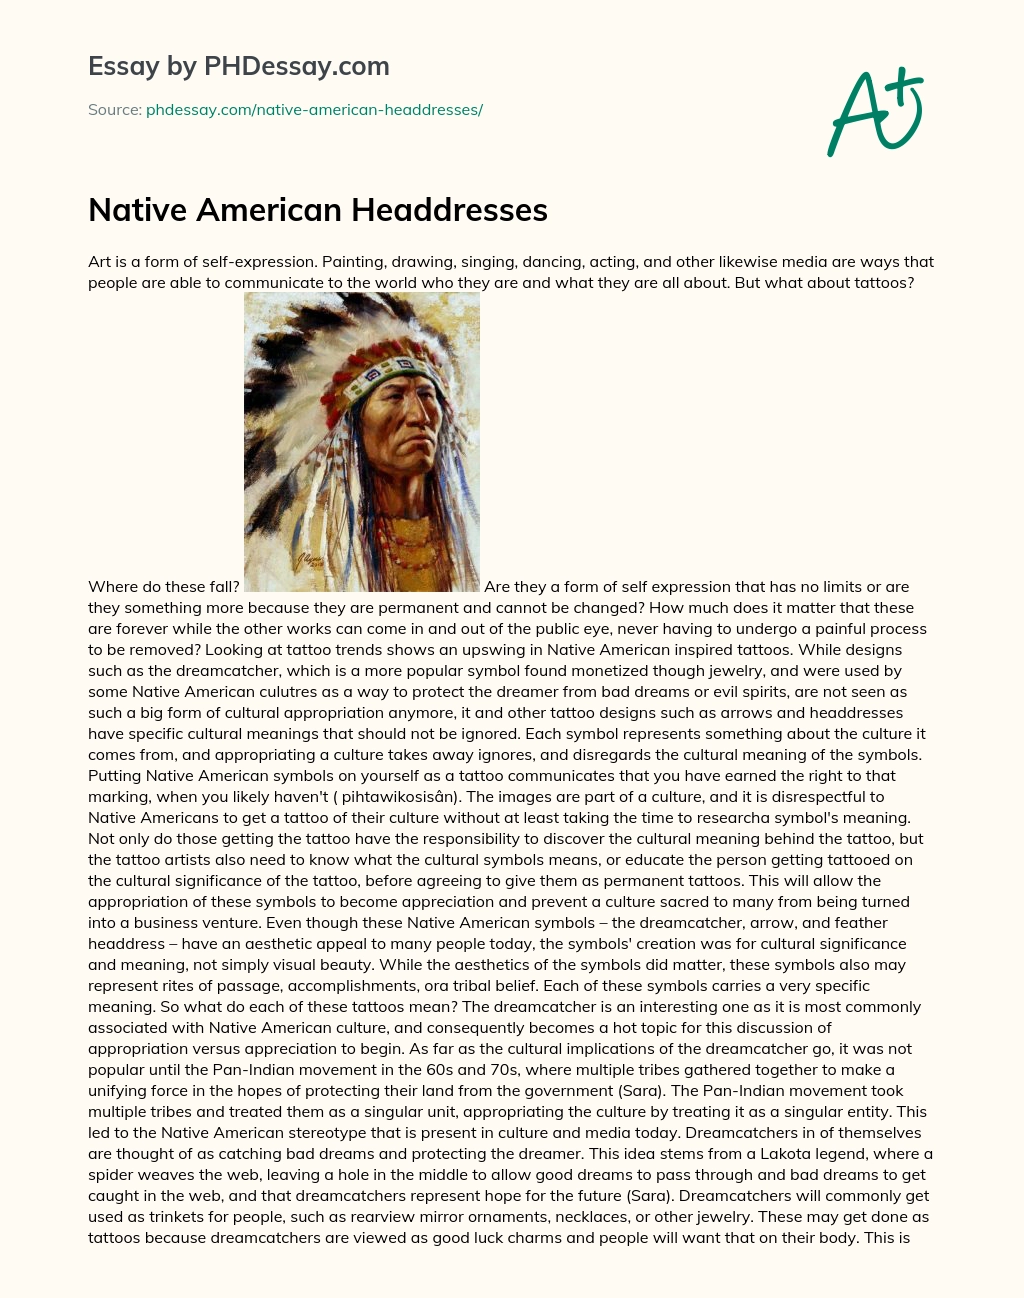 Native American Headdresses essay